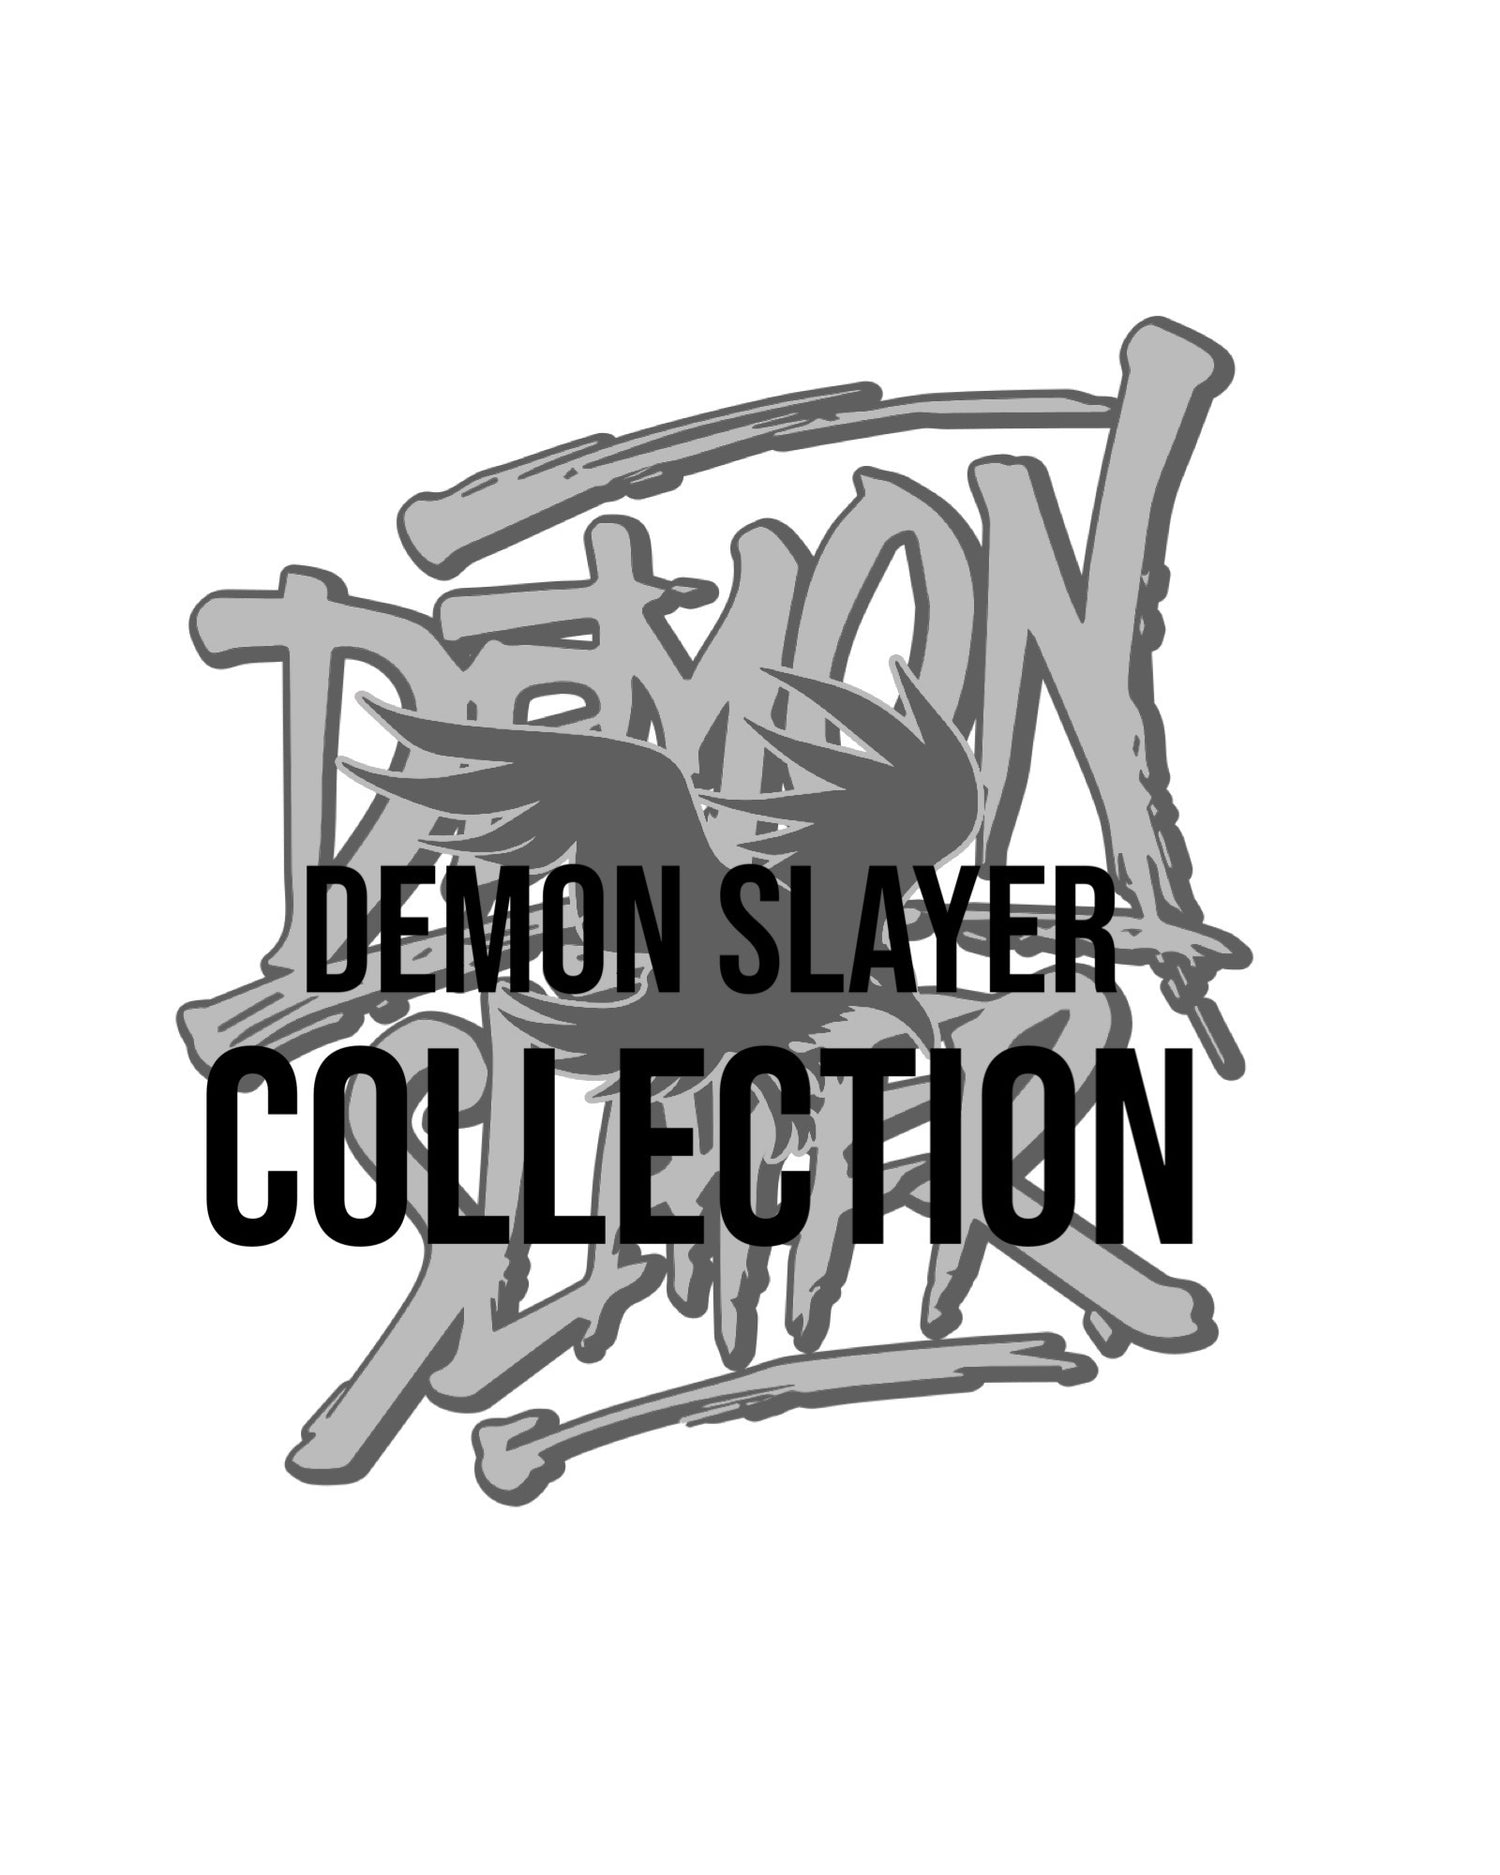 Demon slayer collection